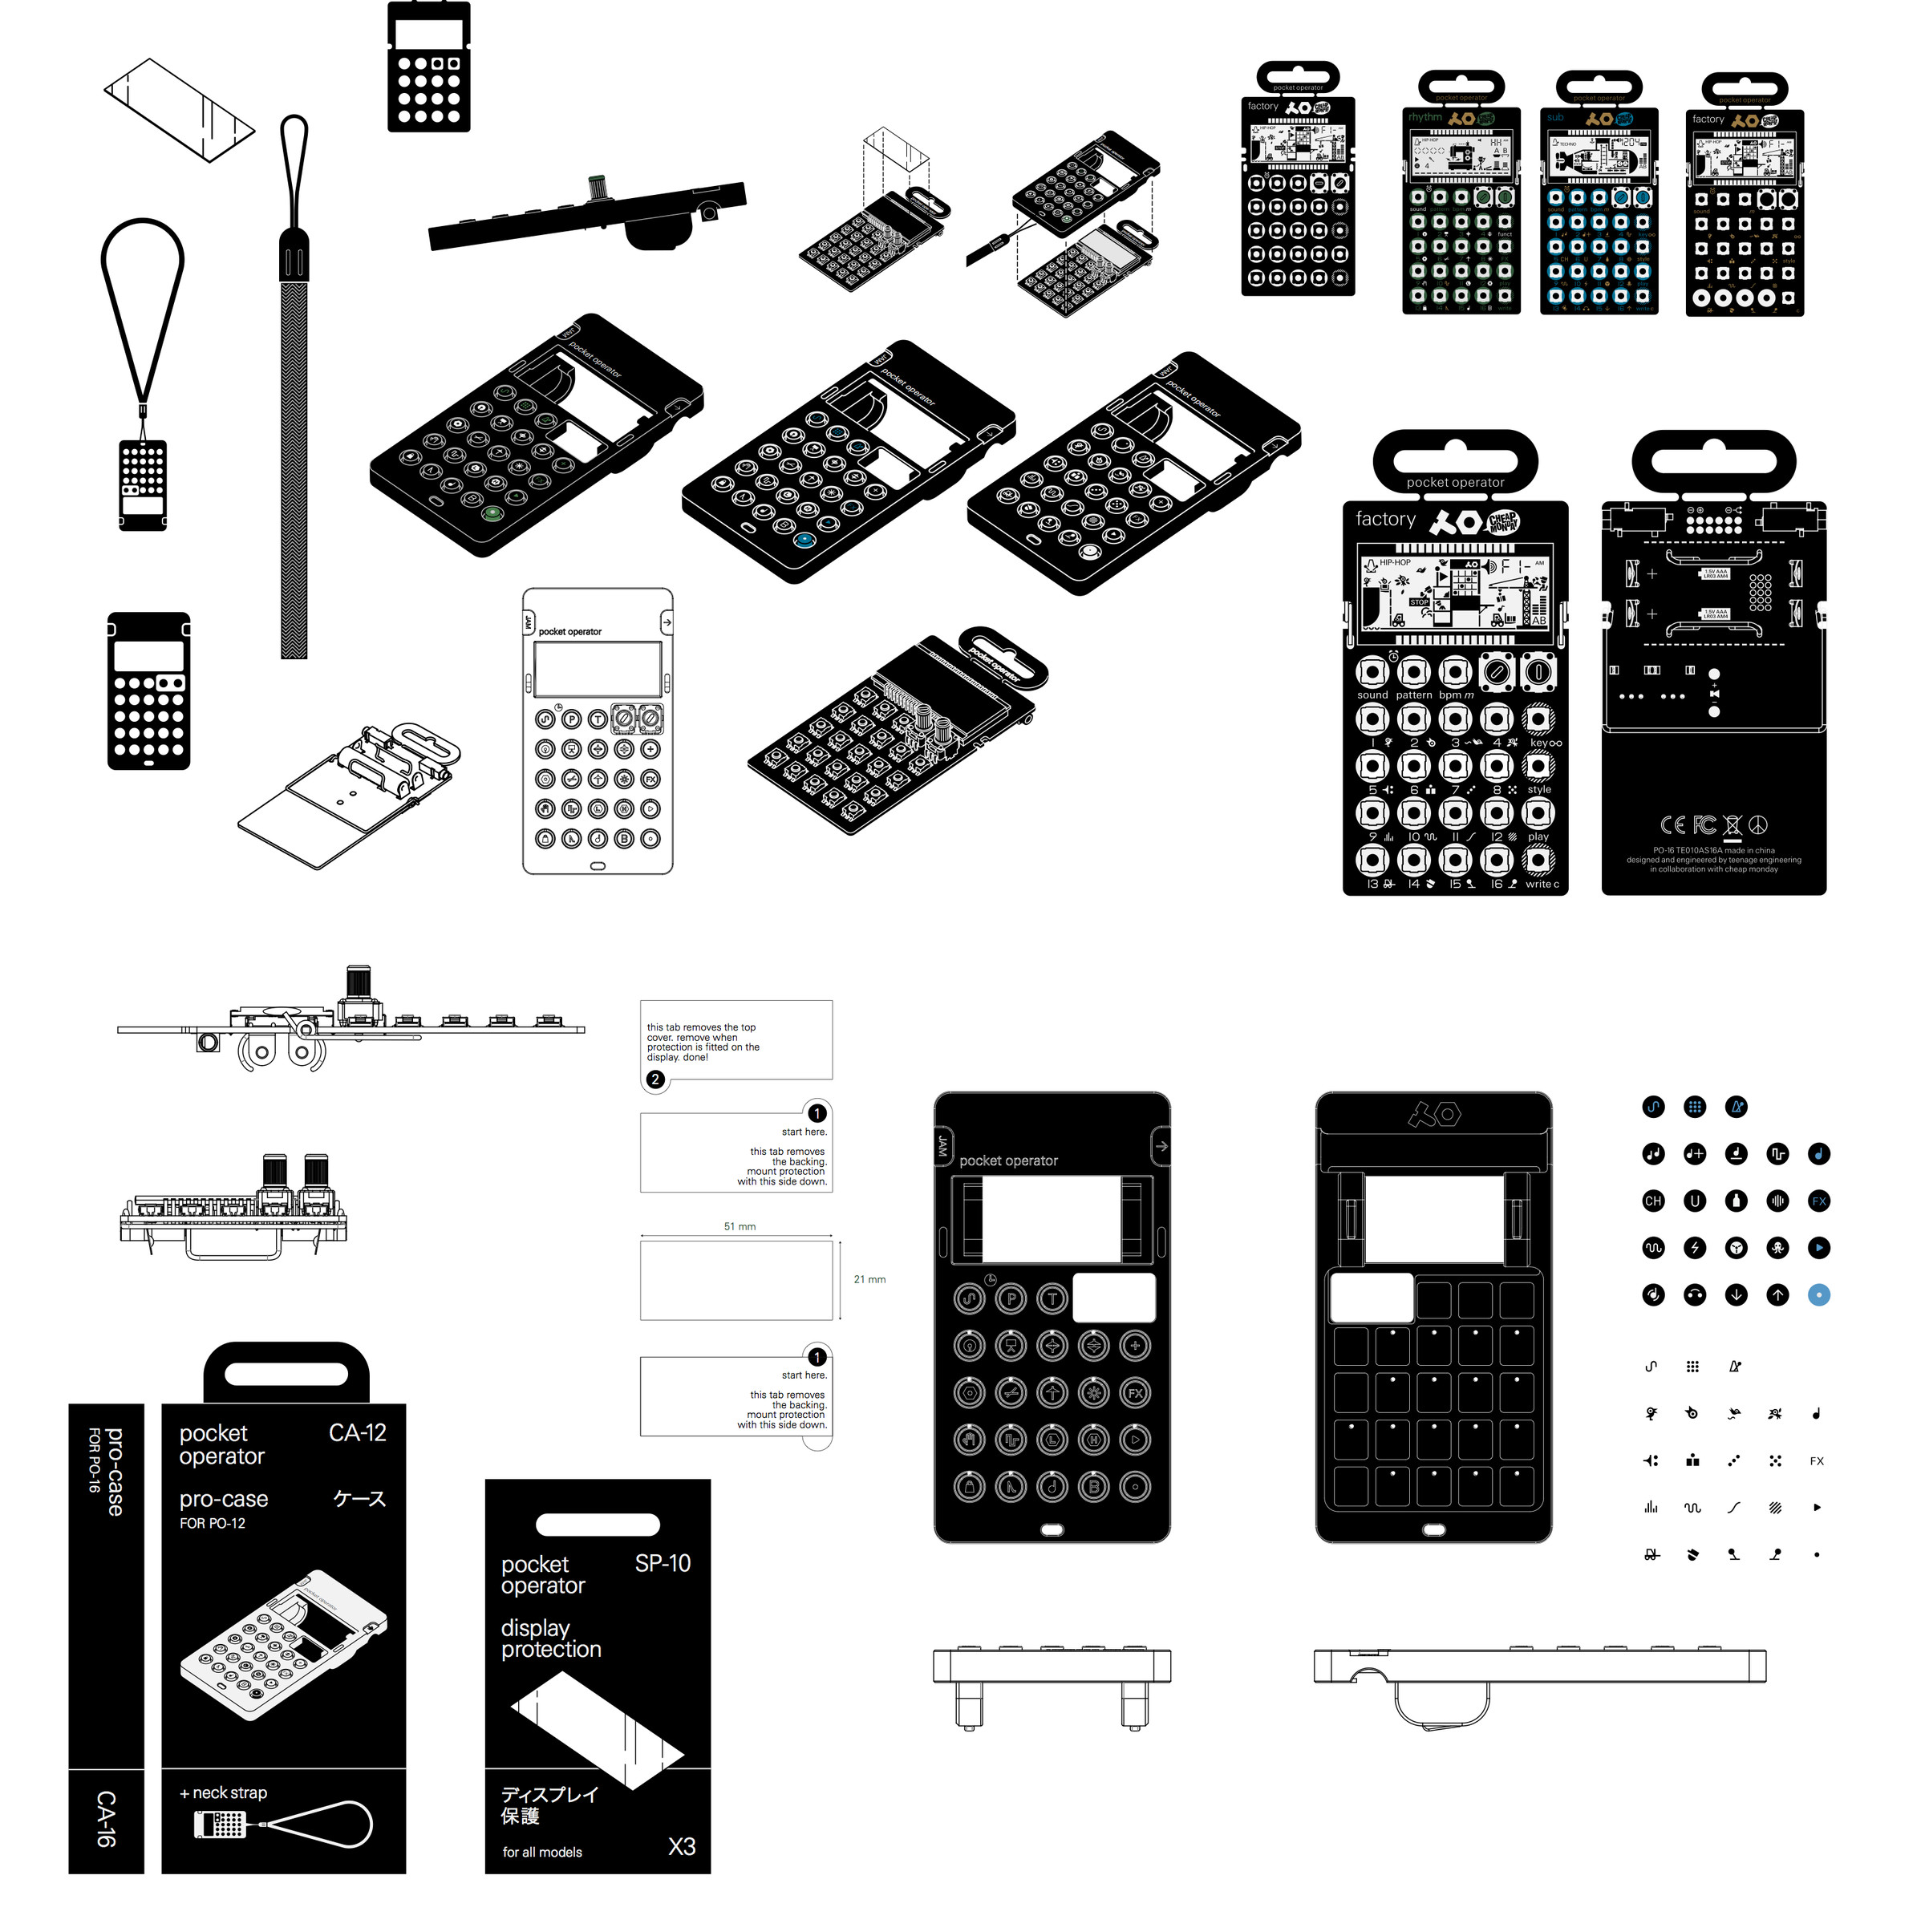 Teenage Engineering Pocket Operator design images